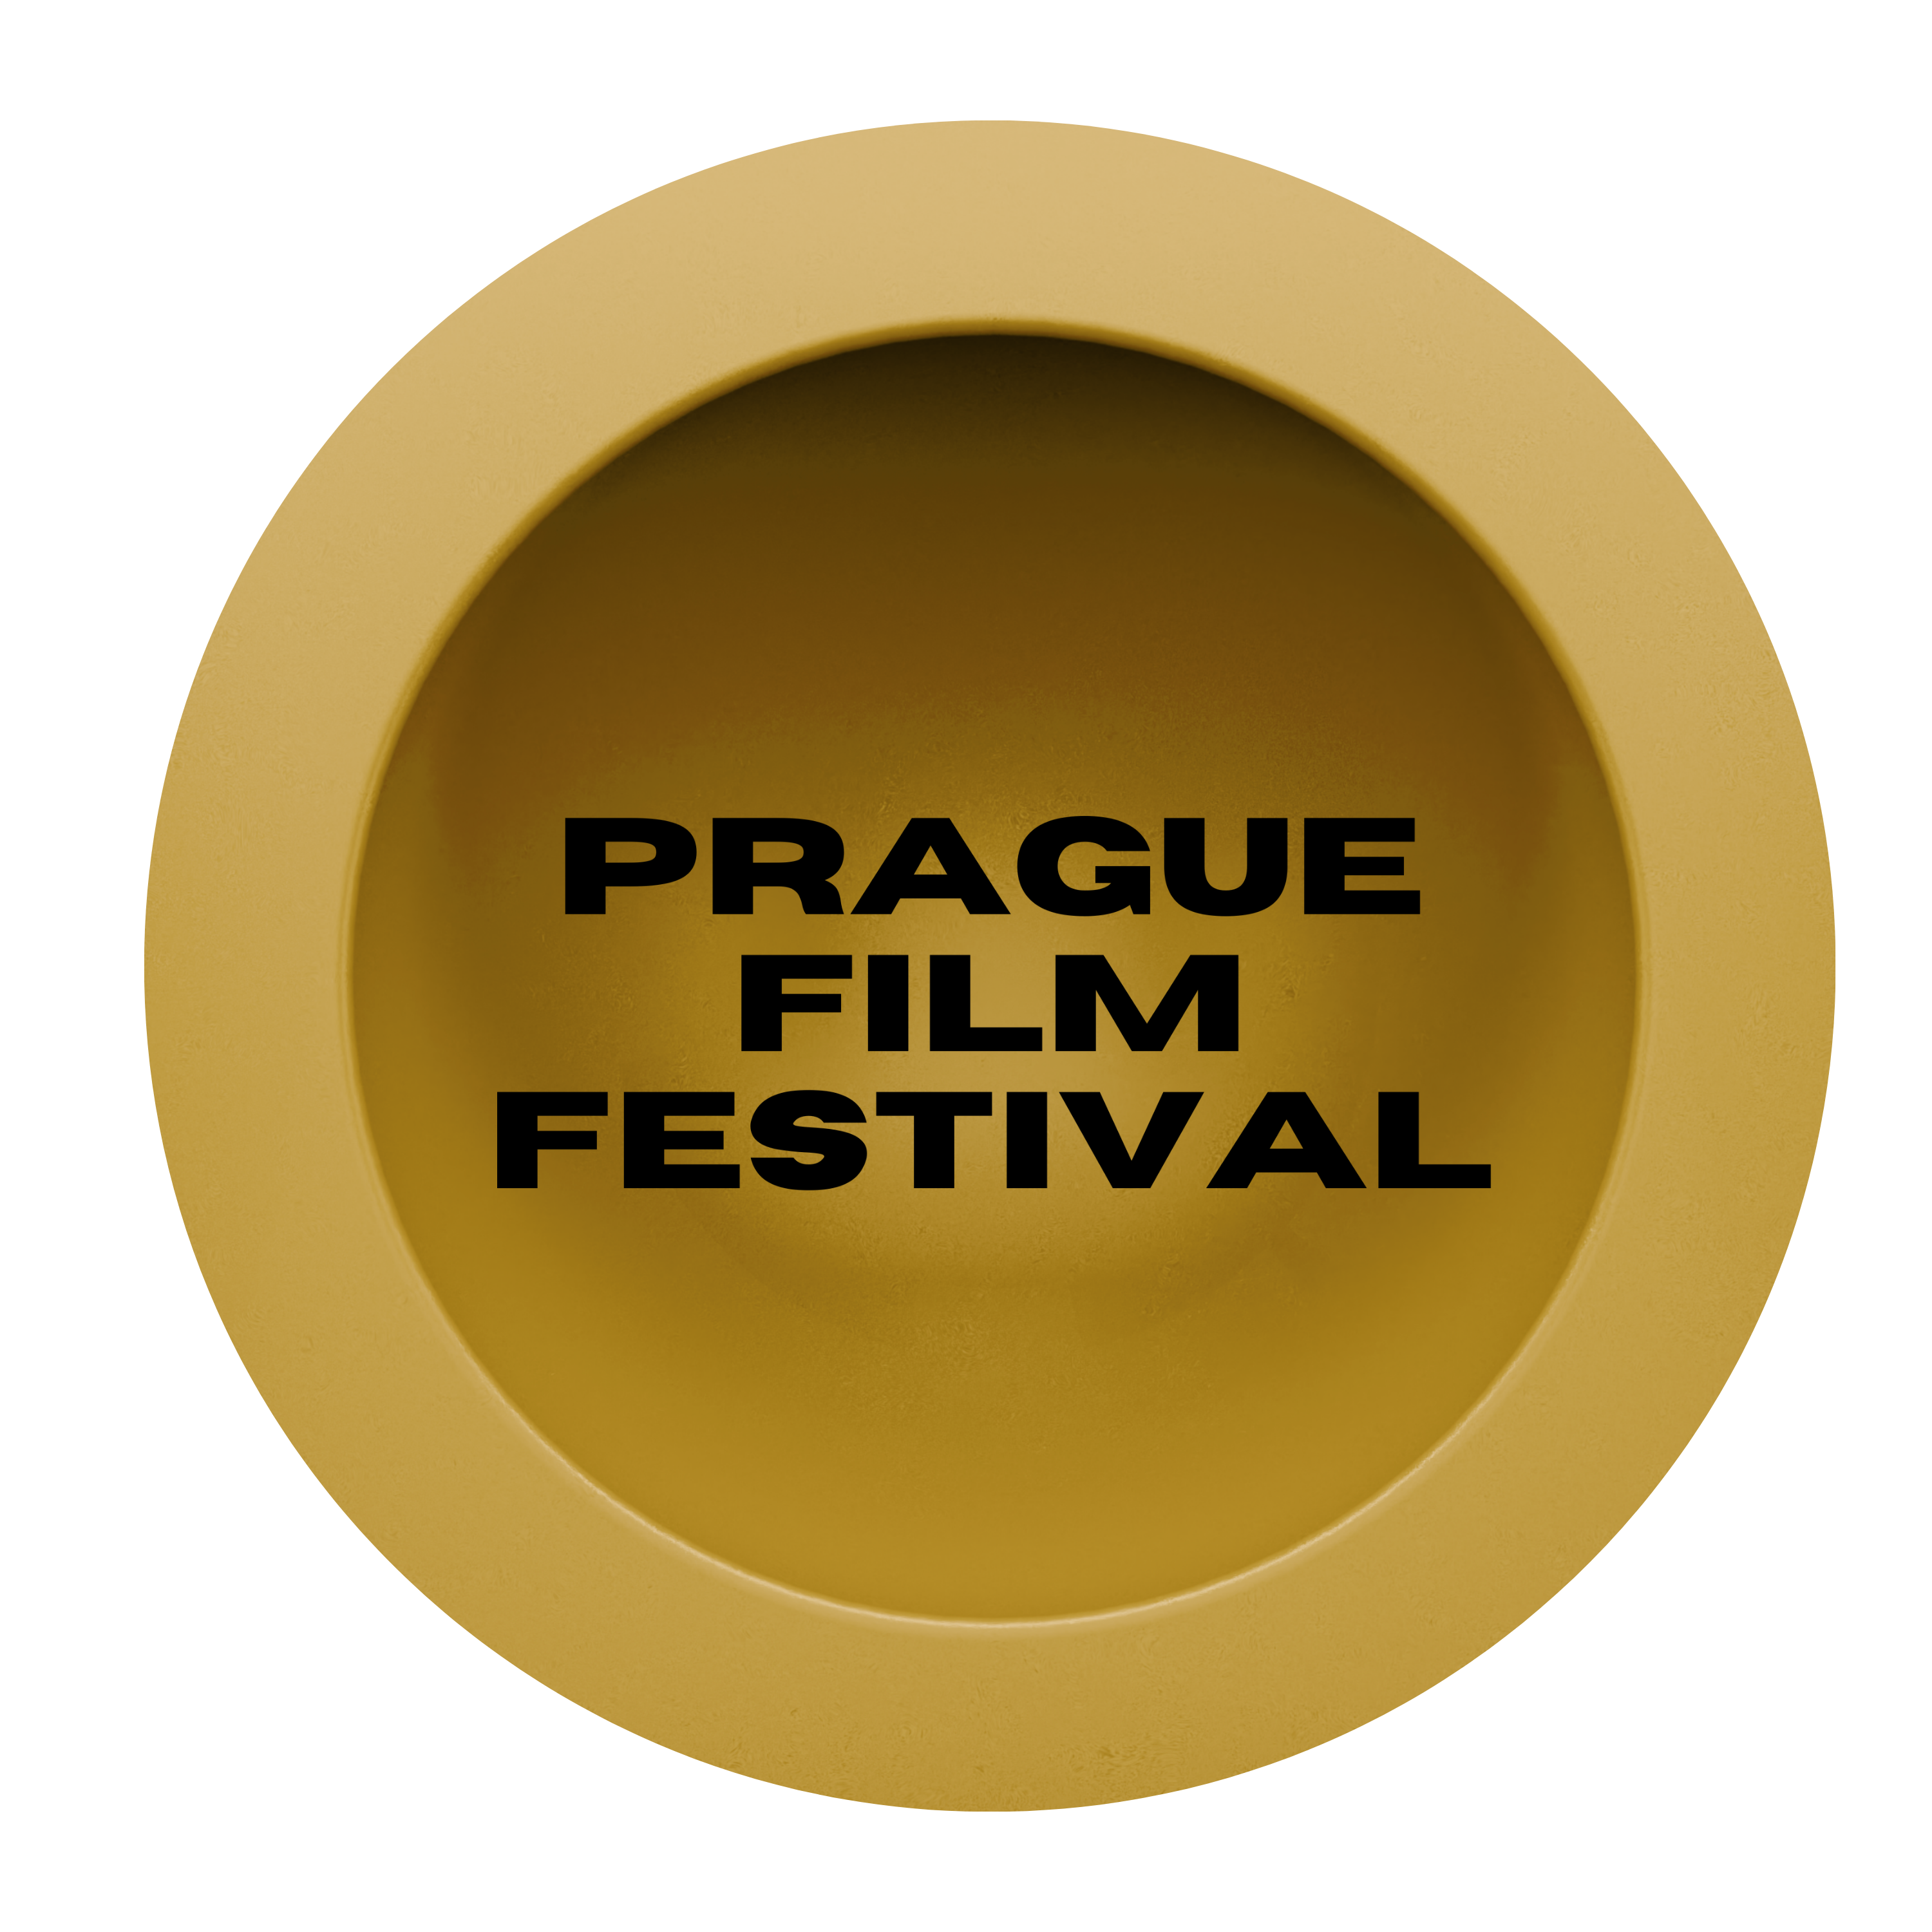 PRAGUE FILM FESTIVAL